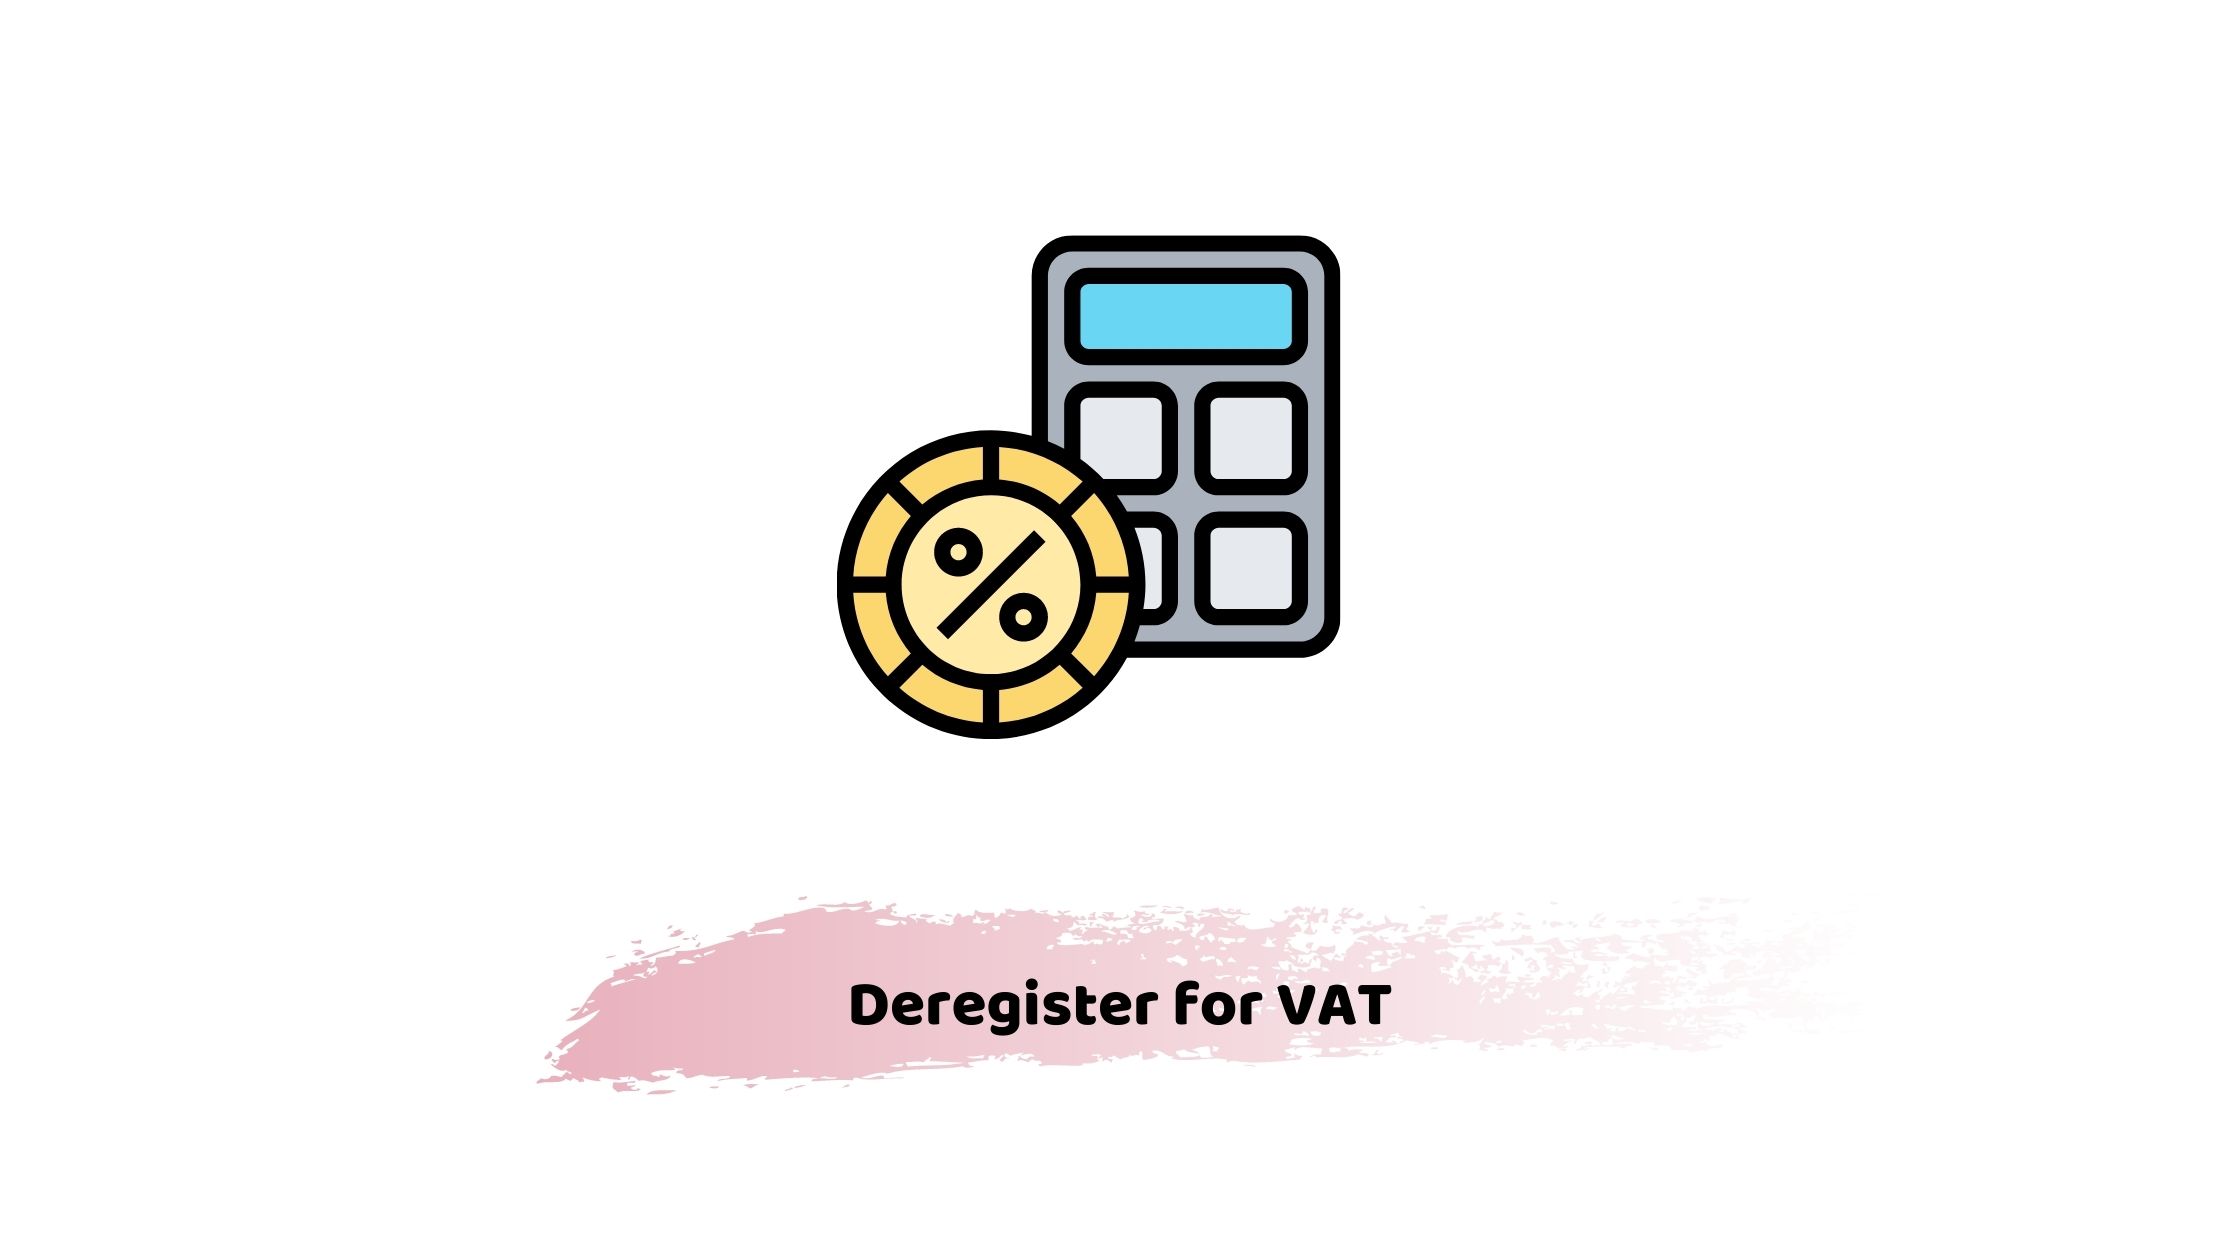 Deregistration from VAT